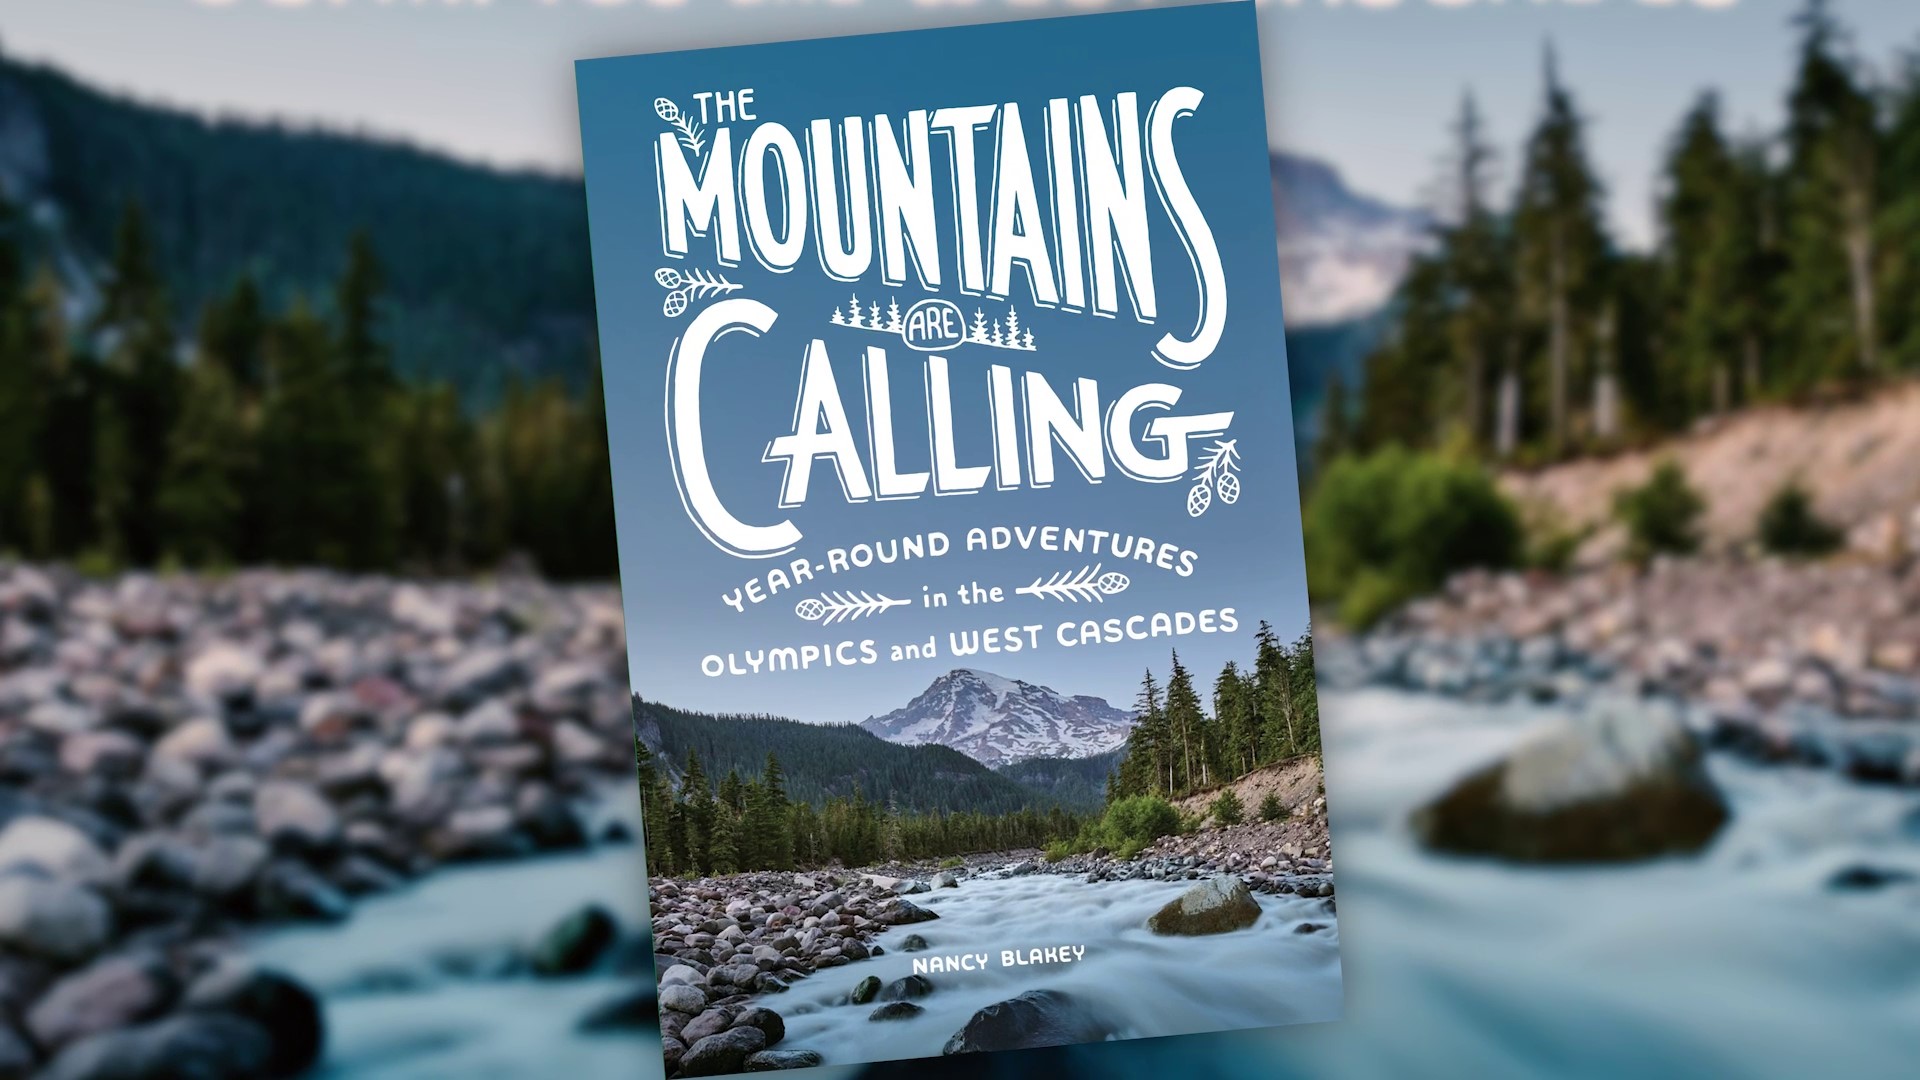 Bainbridge author's new book explores the Olympics and Cascades. #k5evening